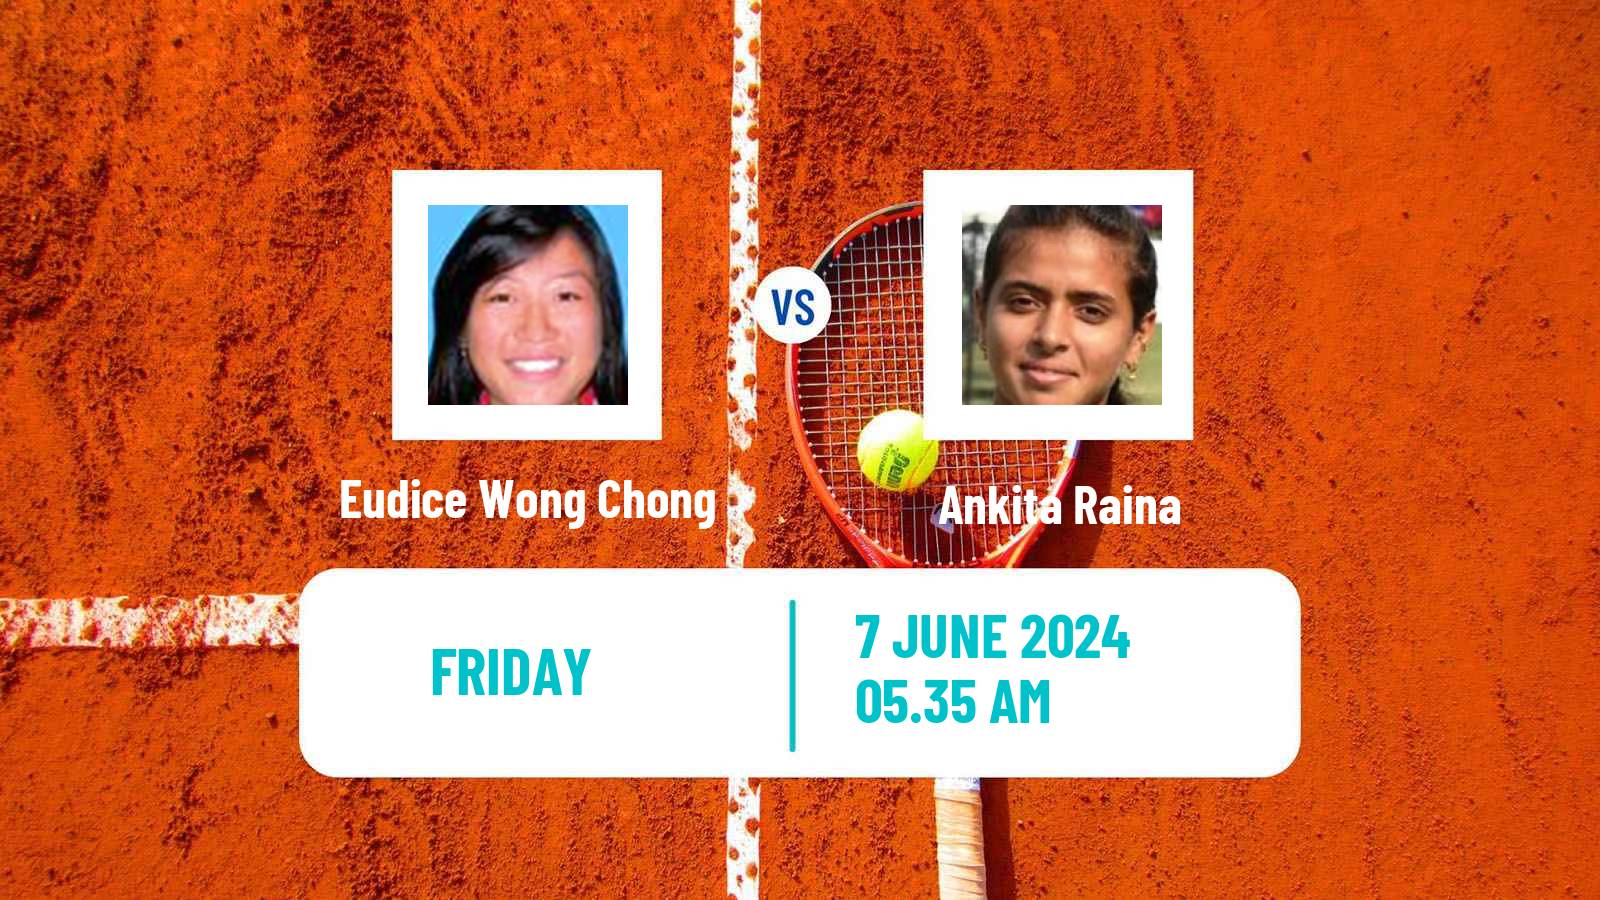 Tennis ITF W50 Montemor O Novo 2 Women Eudice Wong Chong - Ankita Raina